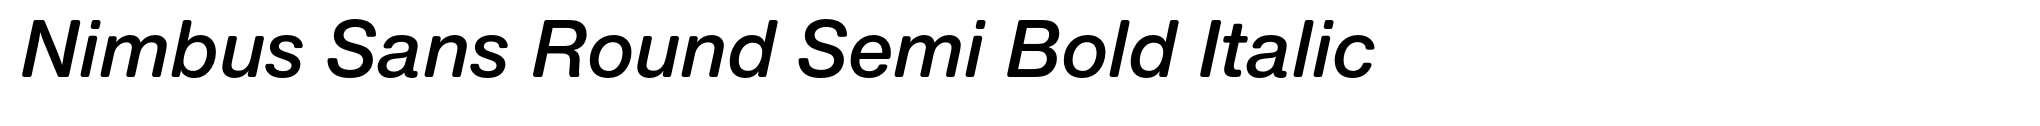 Nimbus Sans Round Semi Bold Italic image